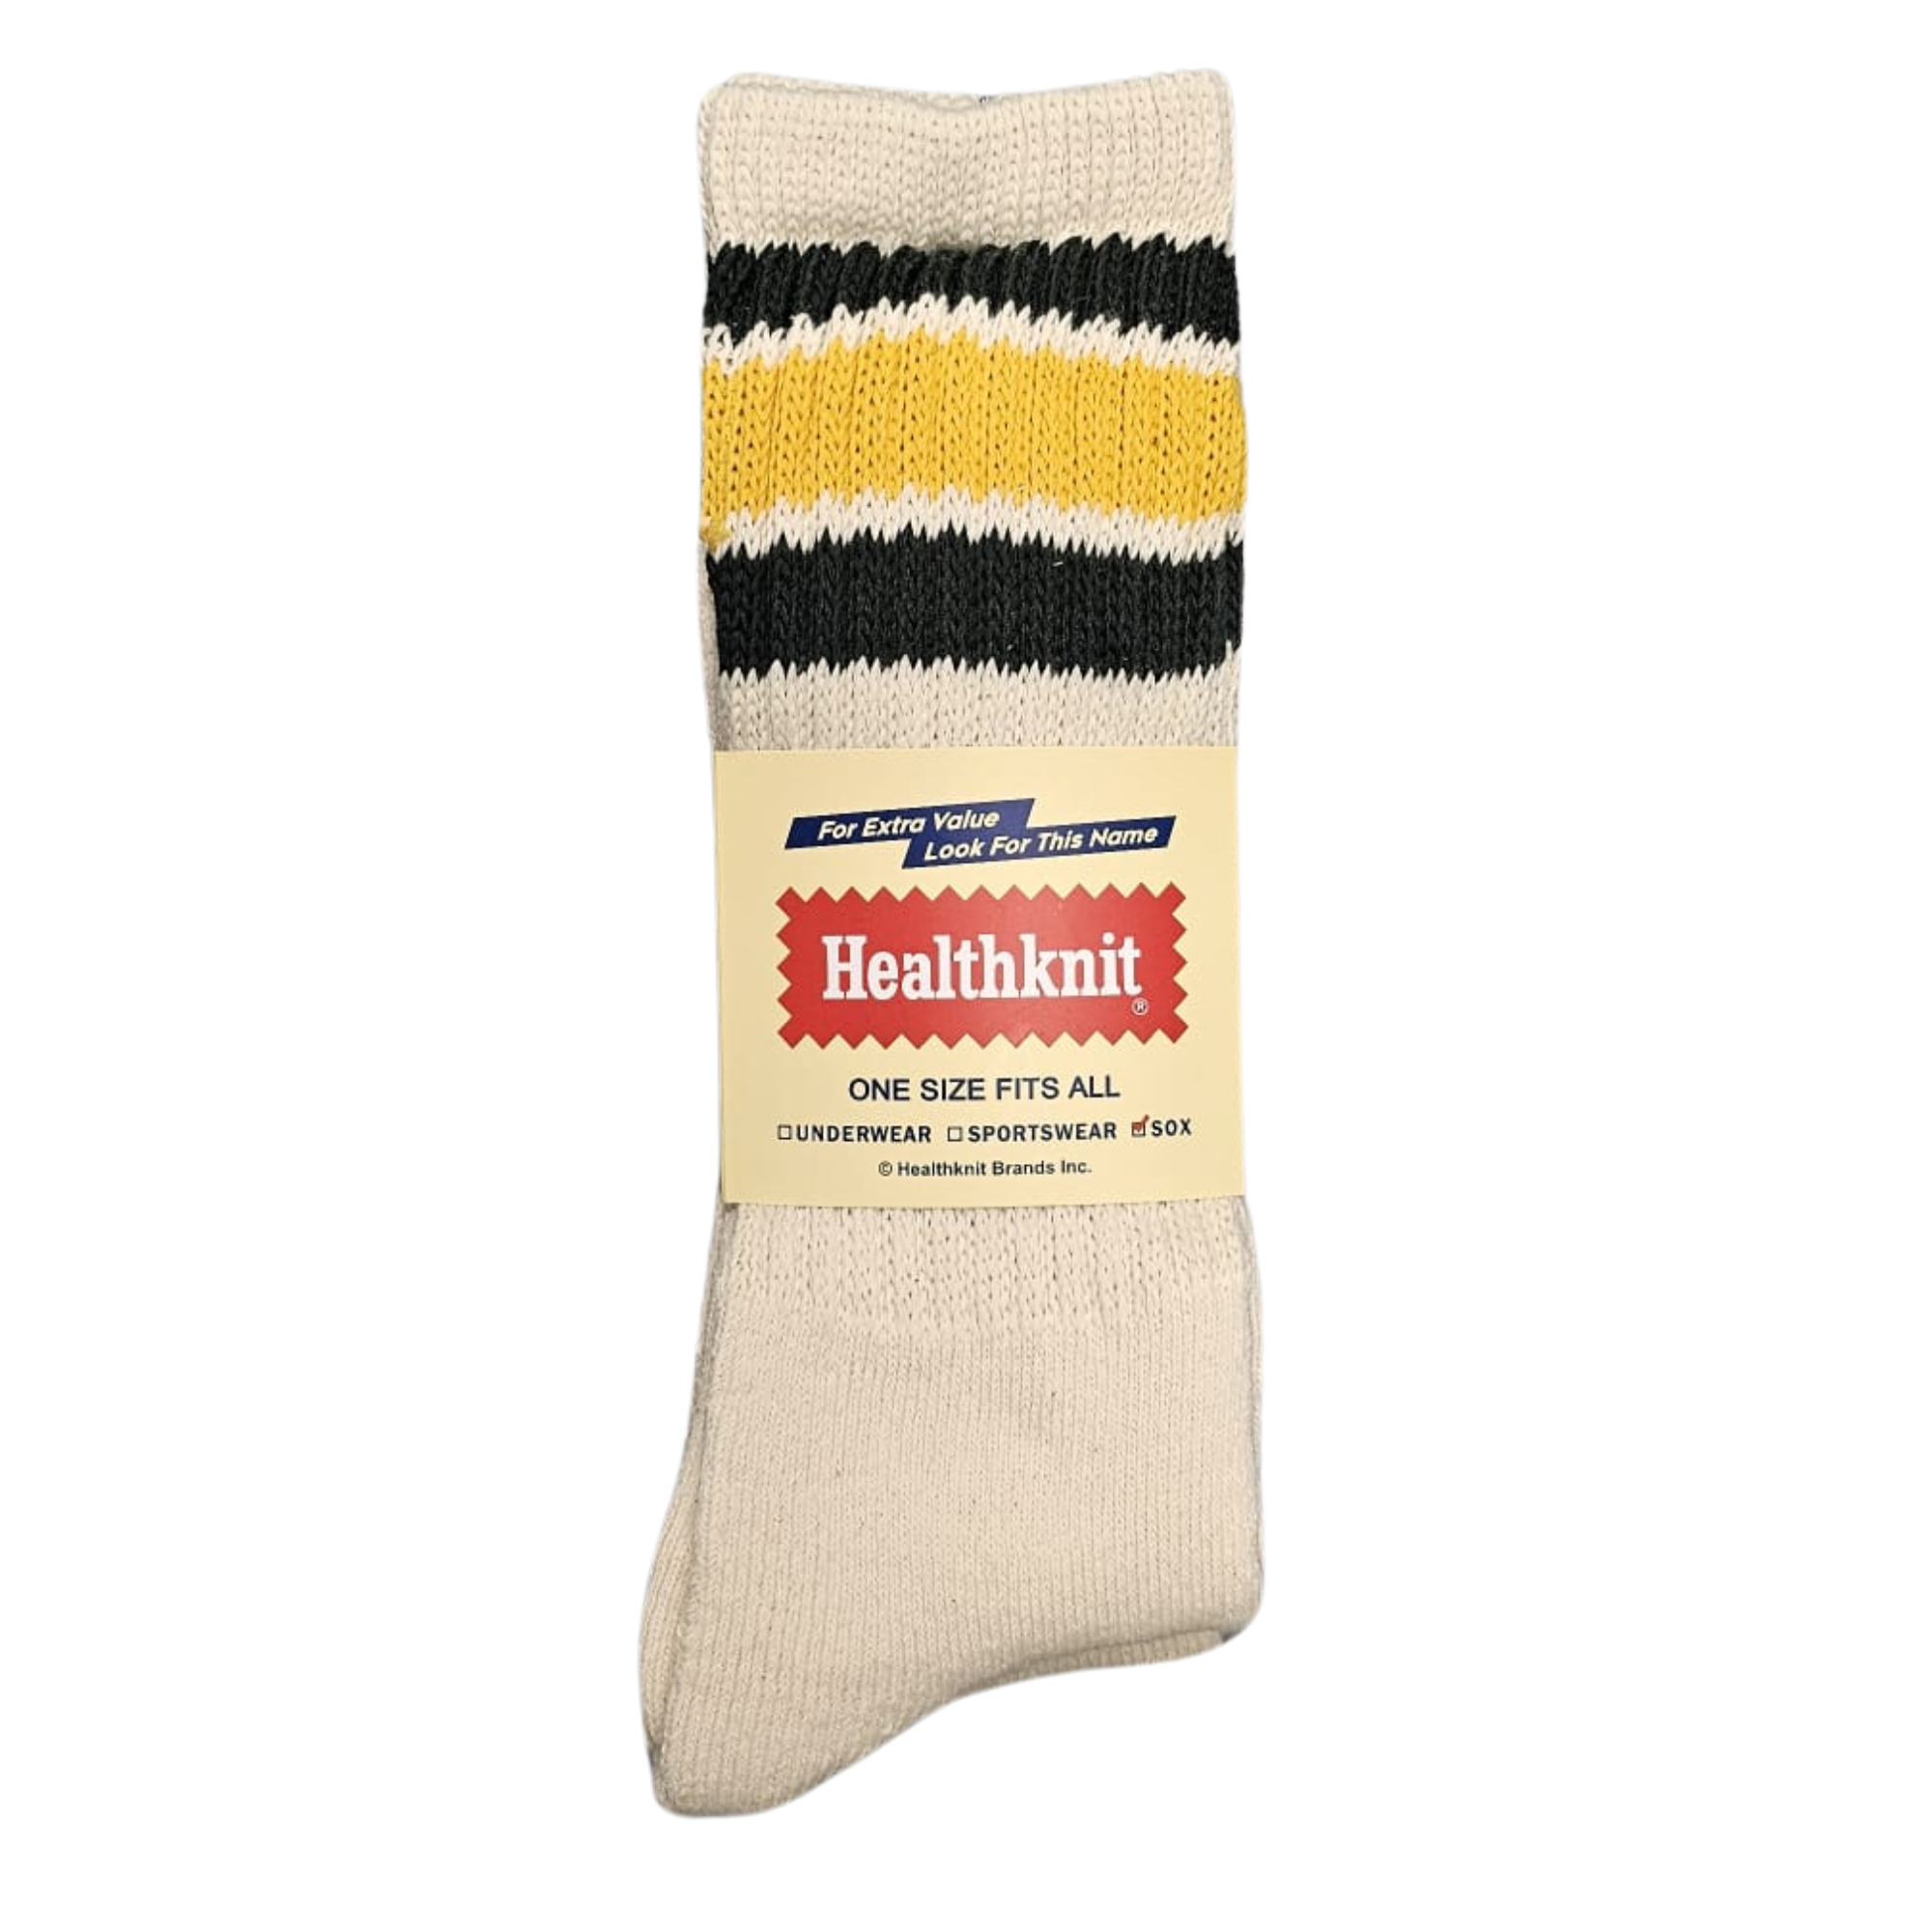 Healthknit Socks 3 Pack in Off White and Multi